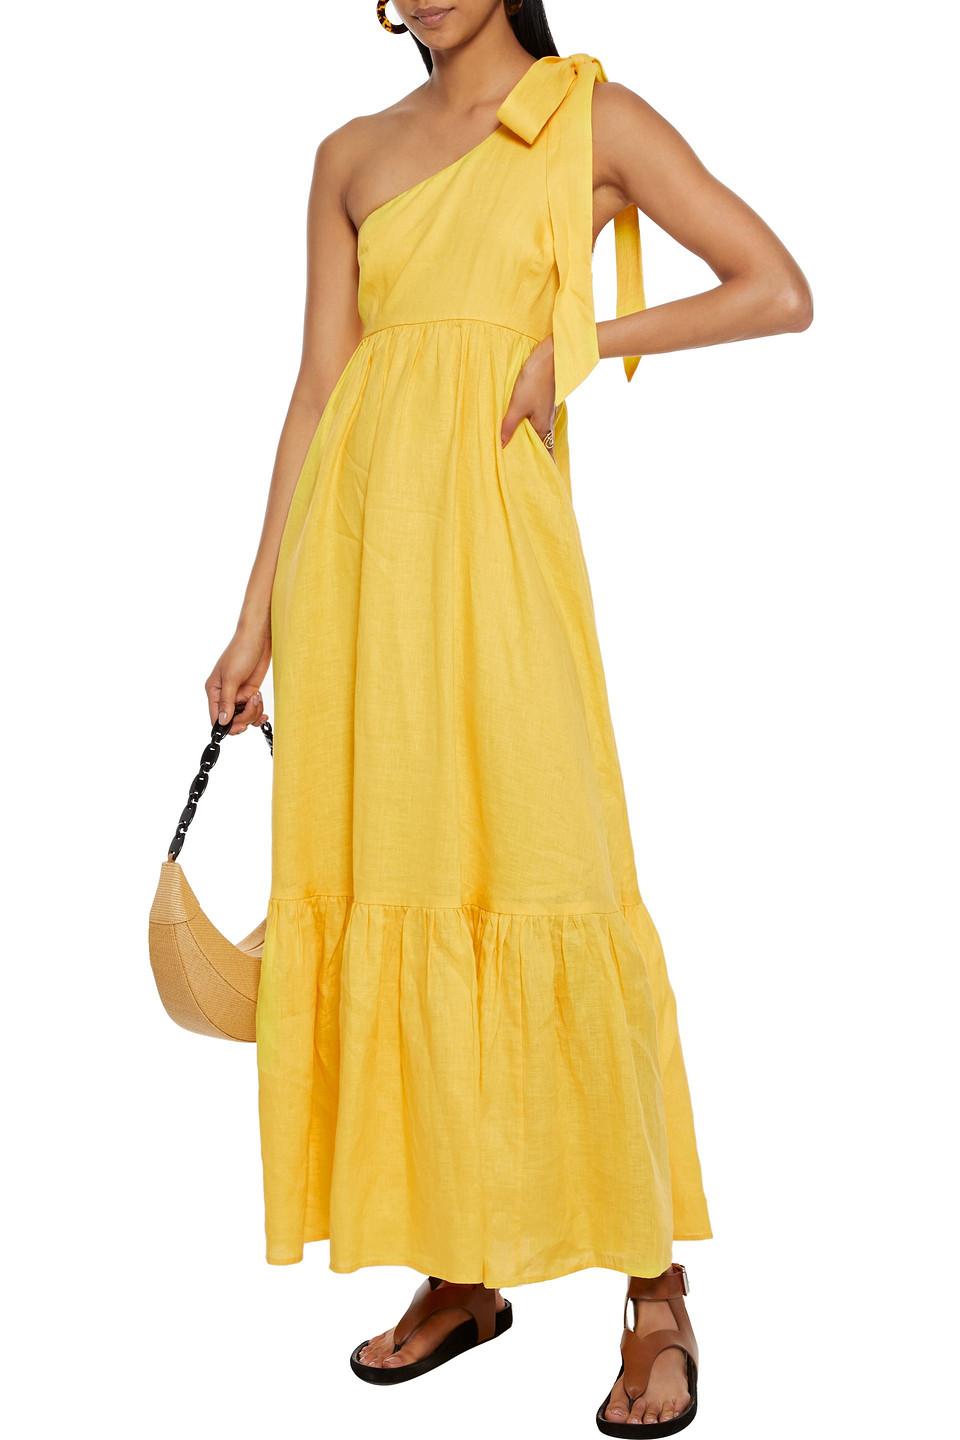 Zimmermann Juliette One-shoulder Bow-detailed Linen Maxi Dress in Yellow -  Lyst